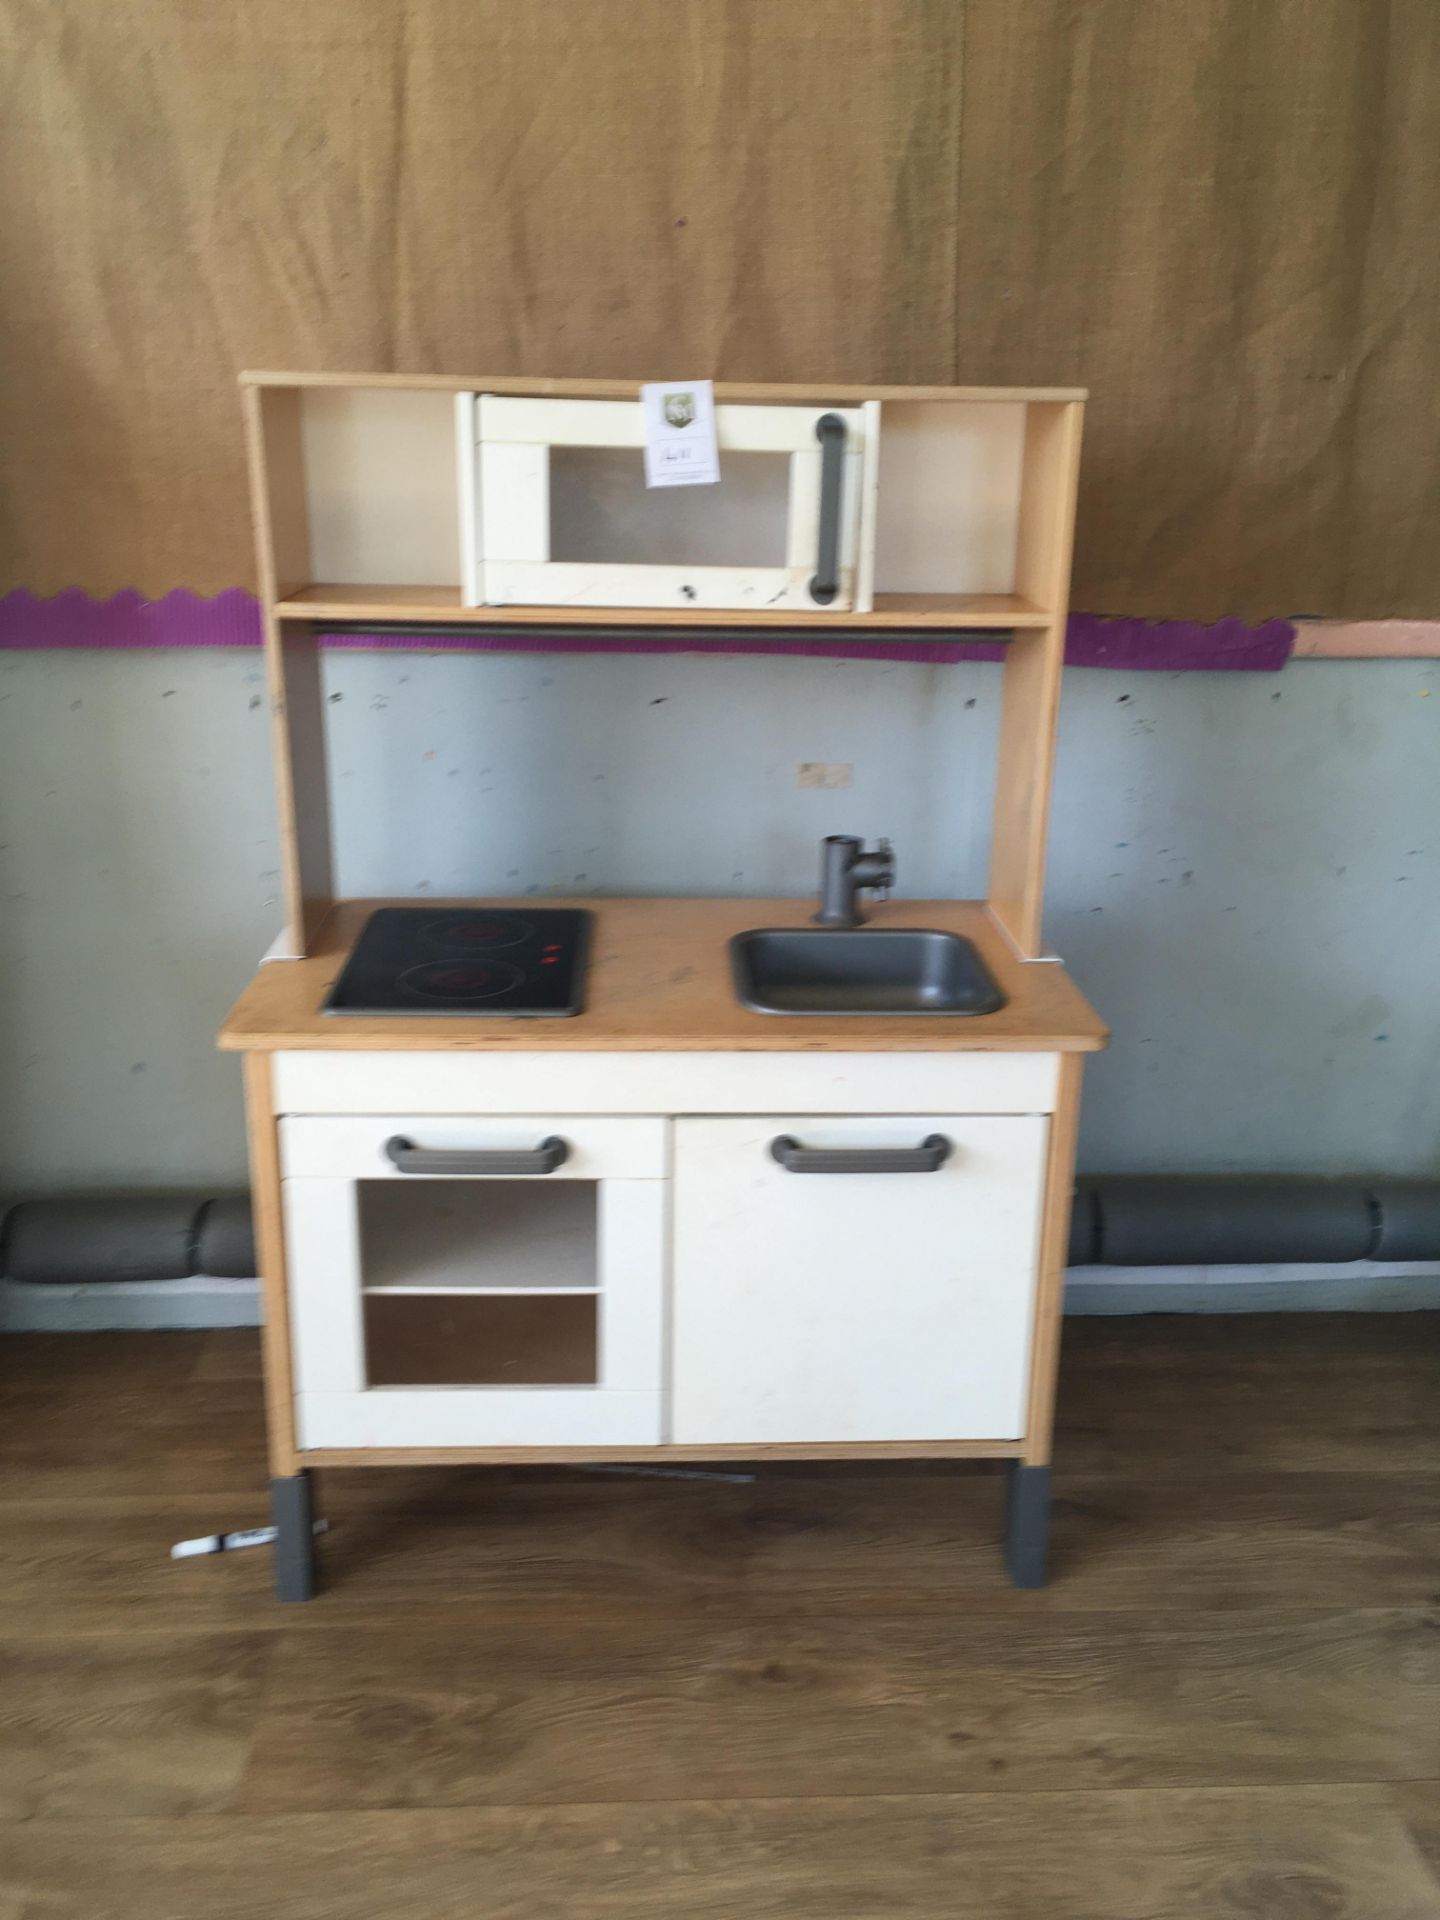 Wooden play kitchen unit